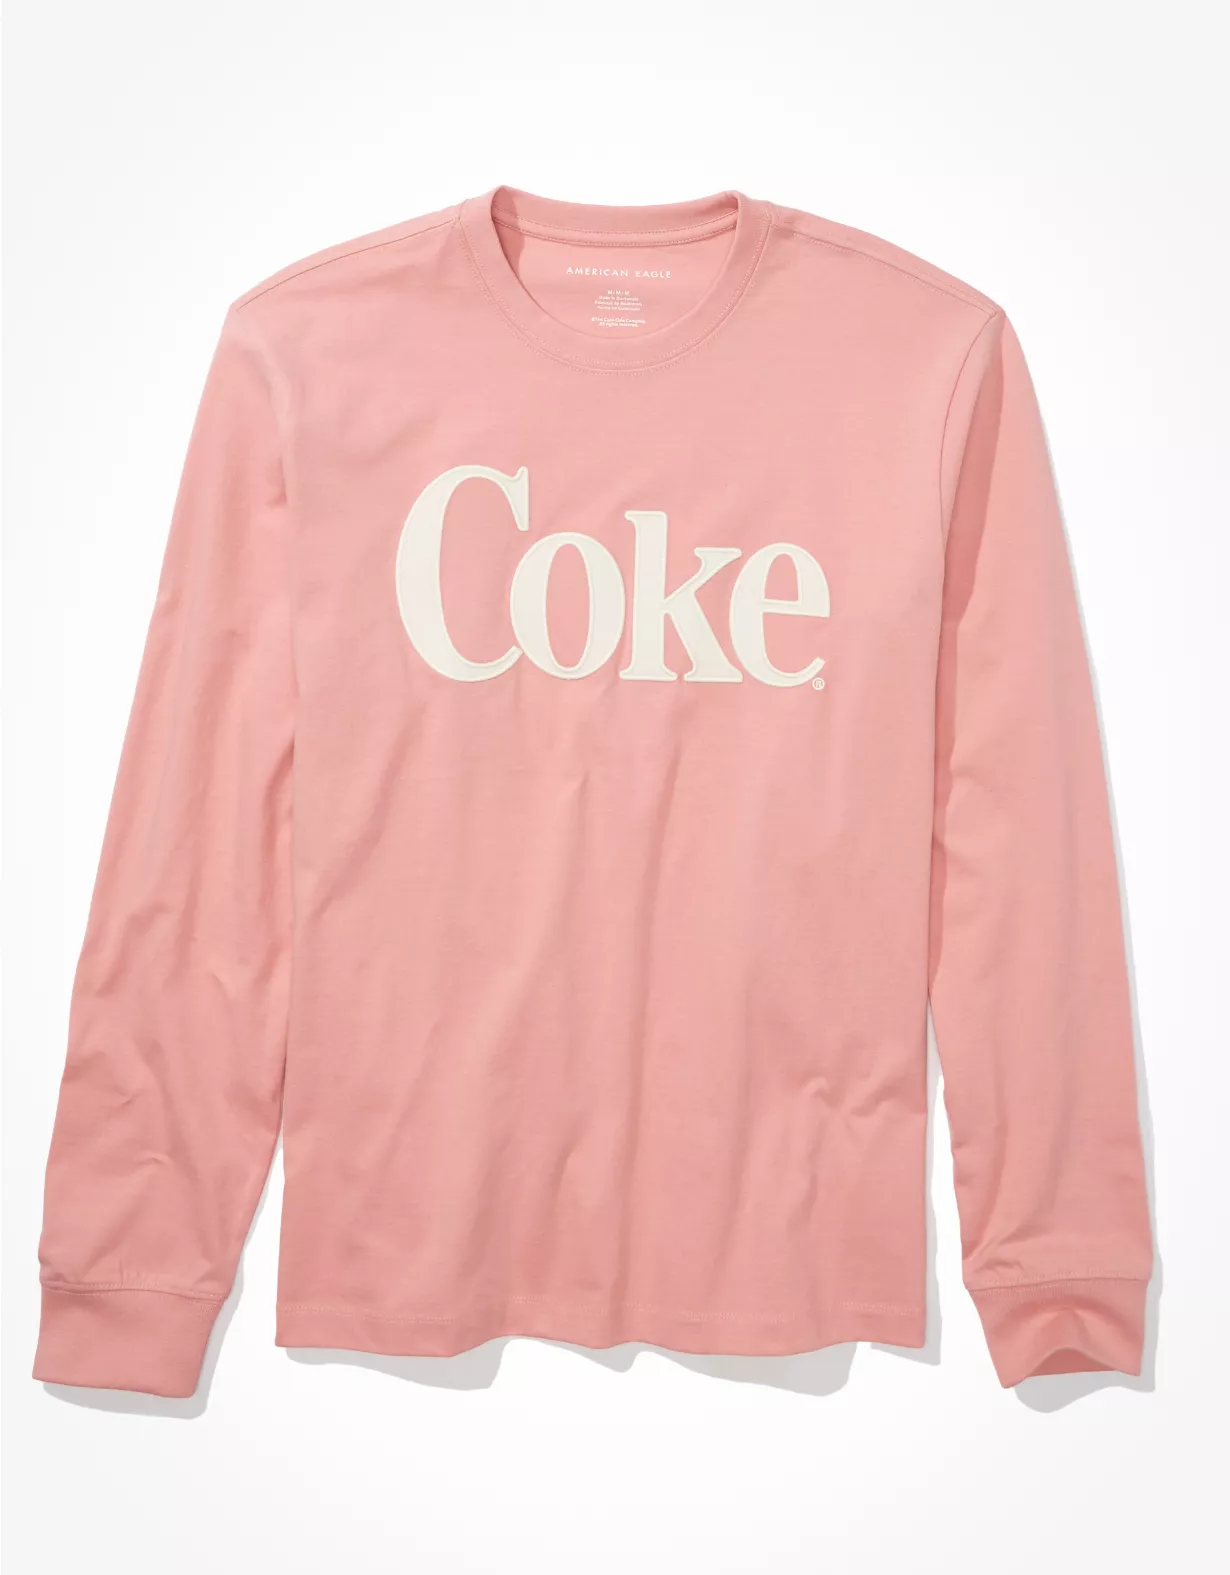 AE Super Soft Long Sleeve Coke T-Shirt